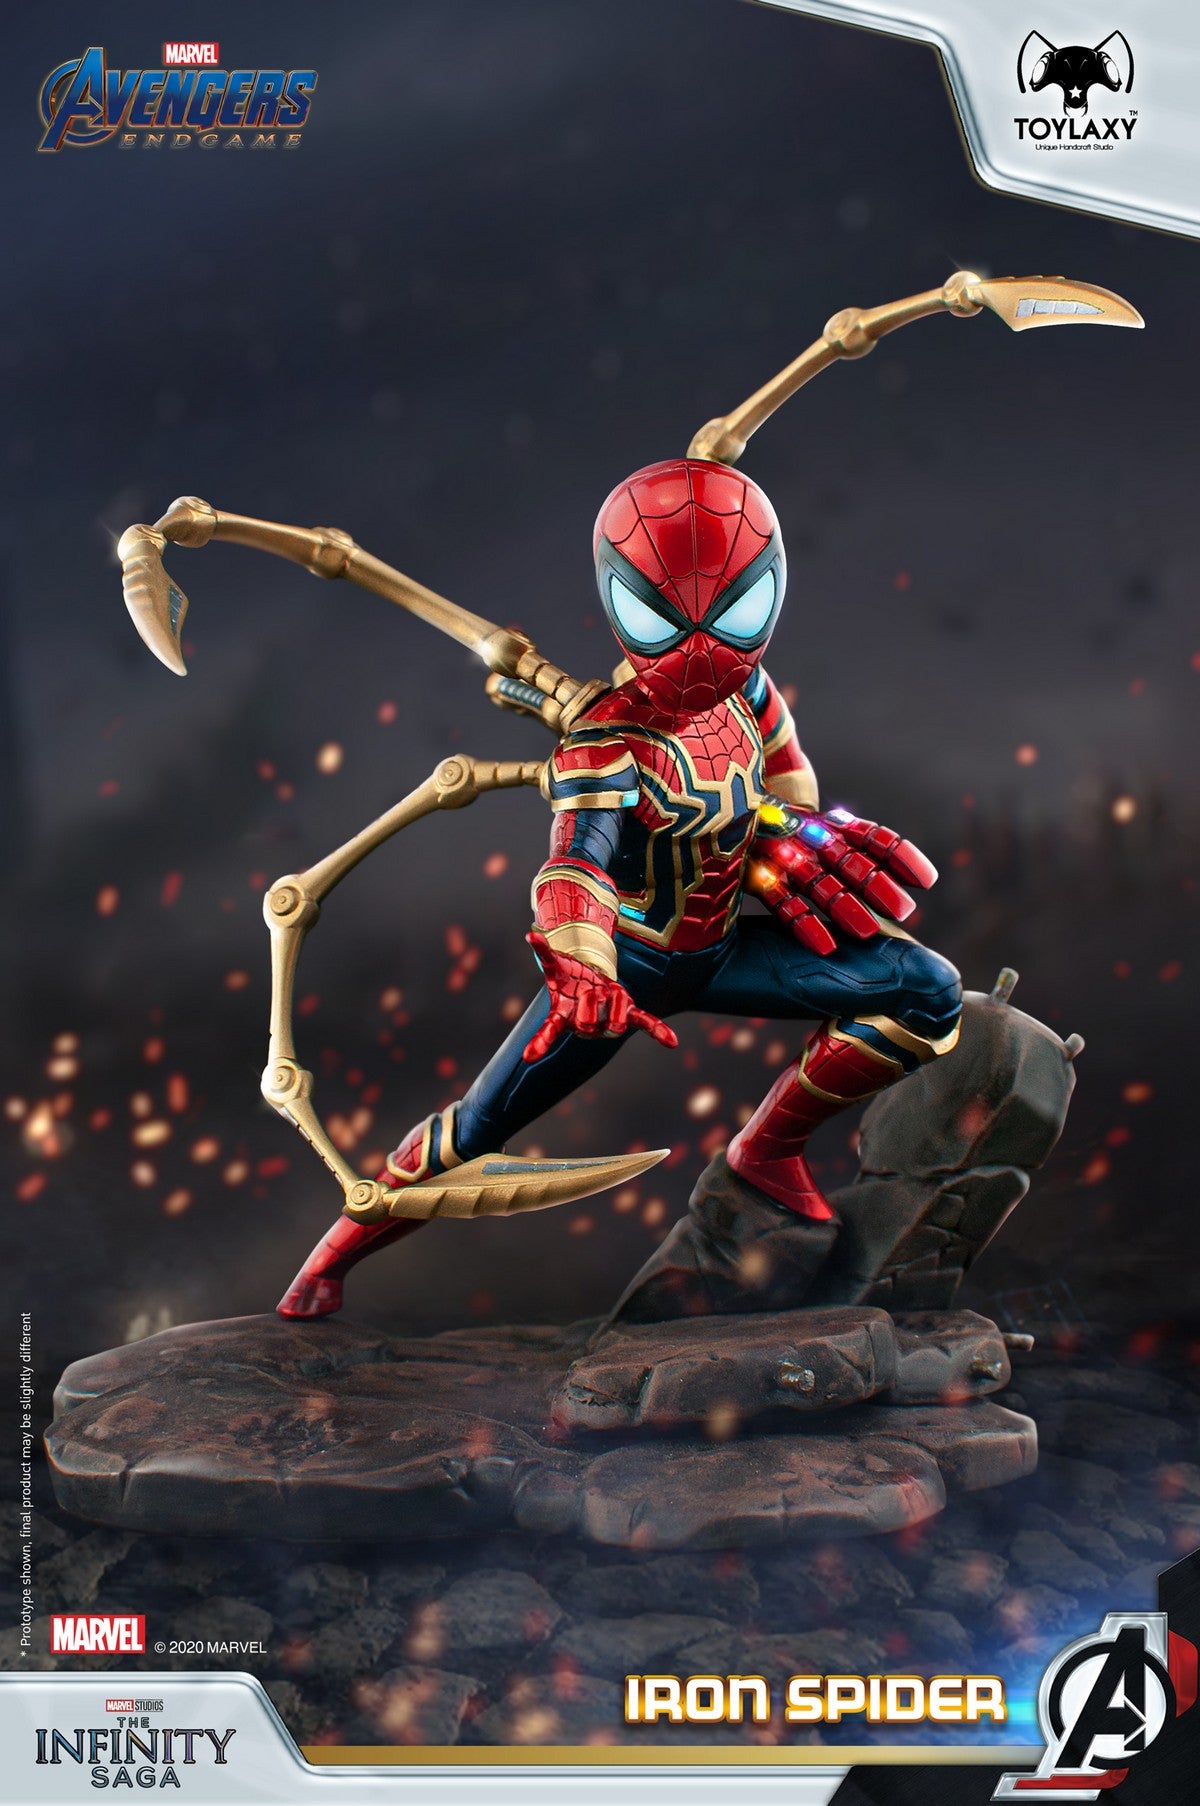 漫威復仇者聯盟：蜘蛛俠--鐵甲蜘蛛特別版正版模型手辦人偶玩具終局之戰版 Marvel's Avengers: Iron Spider Spider Man Official Figure Toy power in endgame long